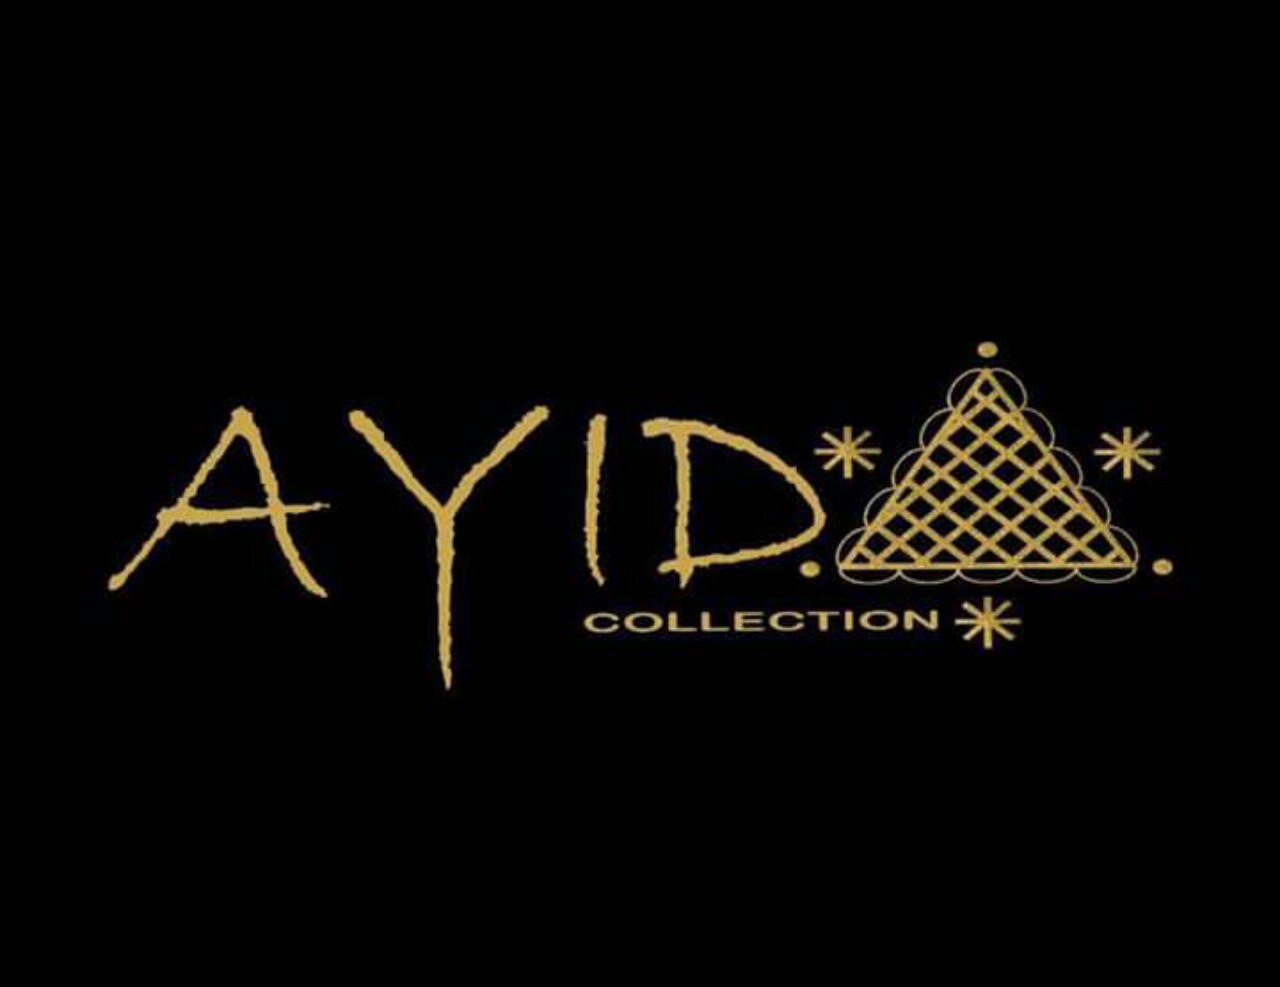 Ayida Collection